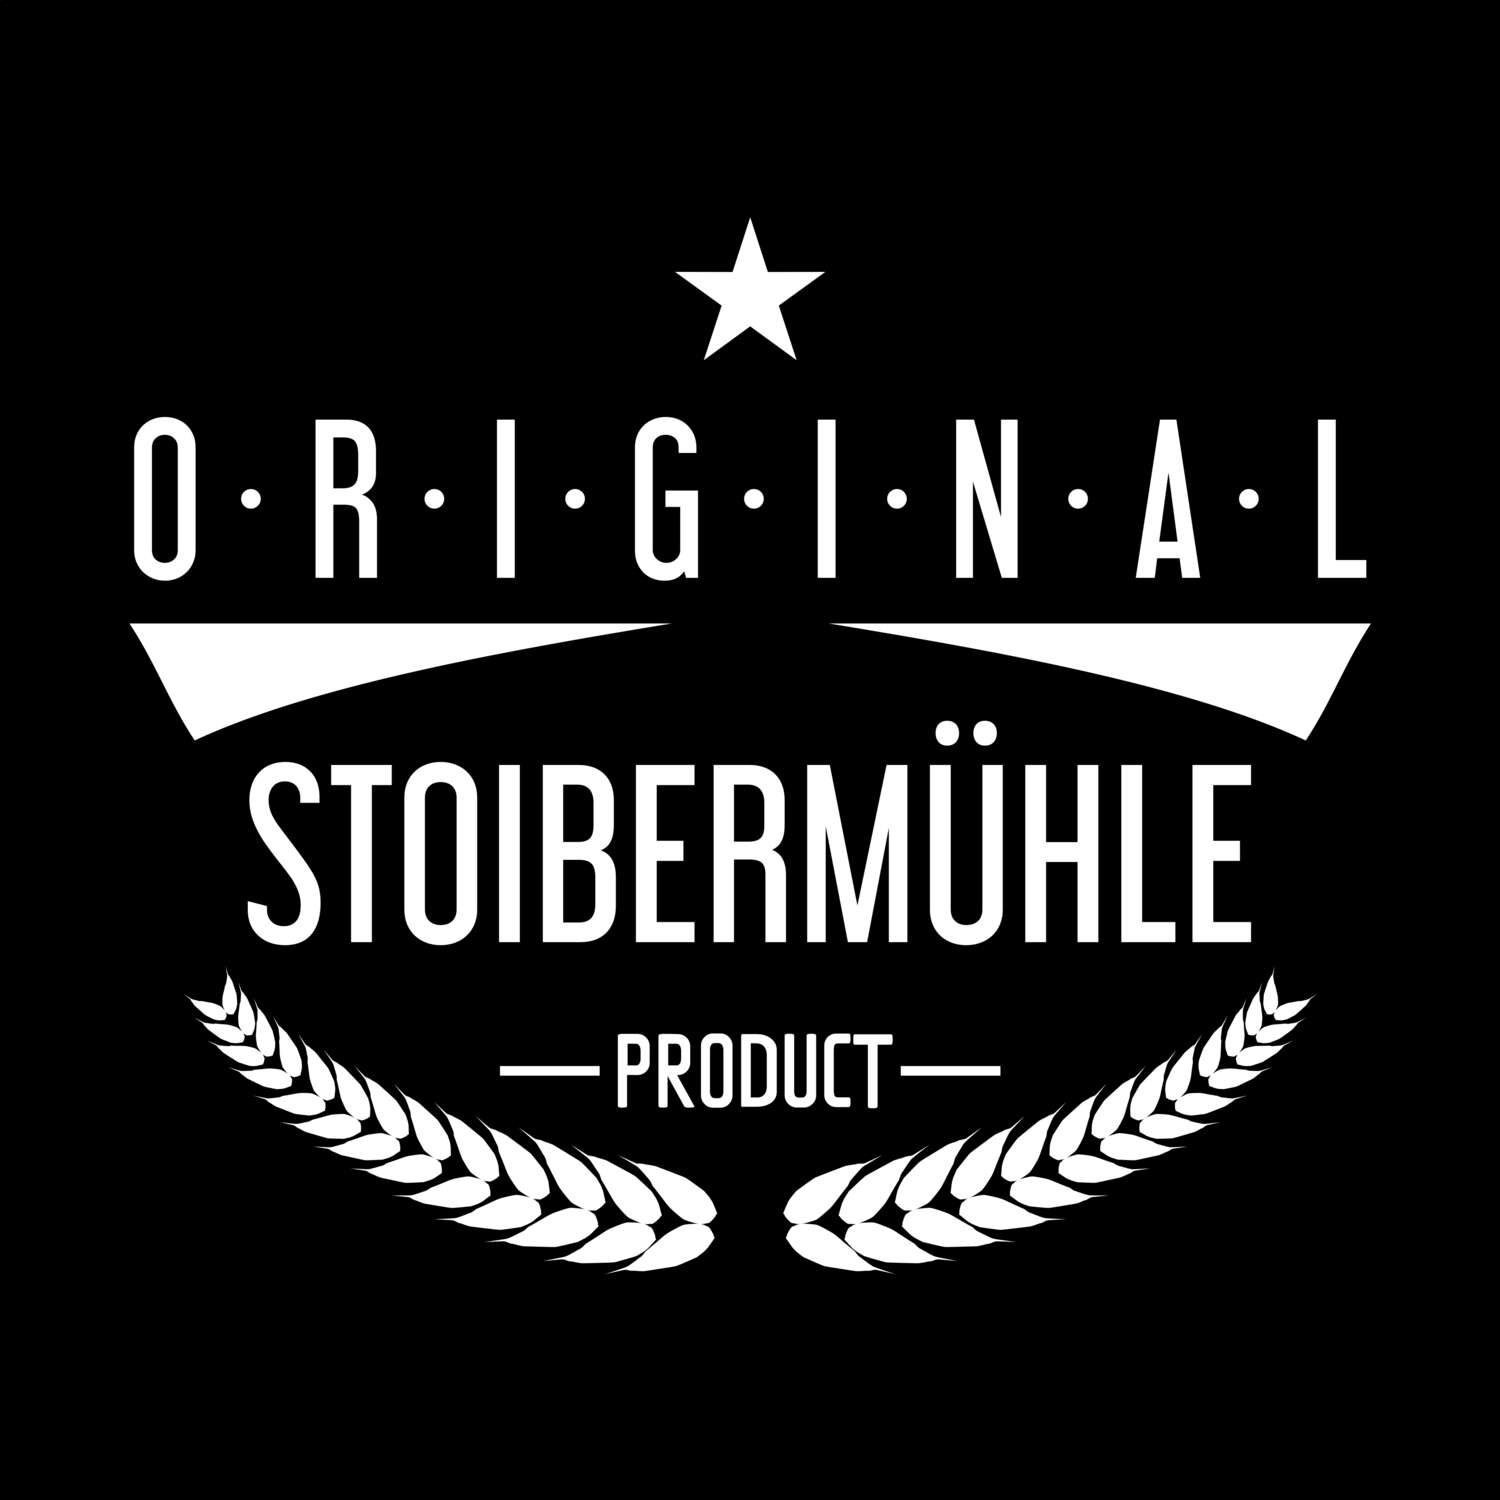 Stoibermühle T-Shirt »Original Product«